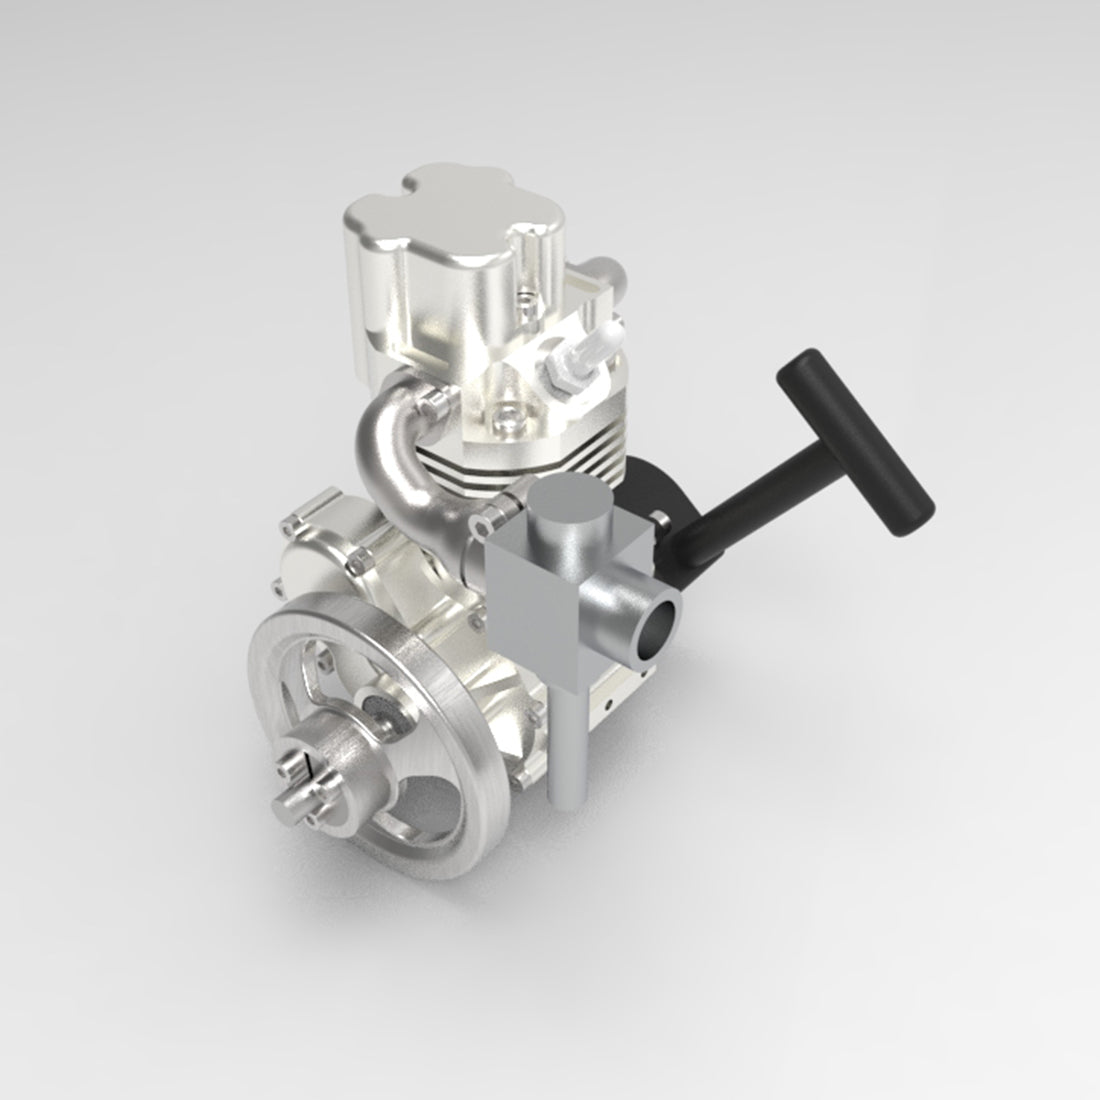 ENJOMOR GS-DK01 4 Stroke Single Cylinder Gas Power Engine RTR 14000rpm 8cc